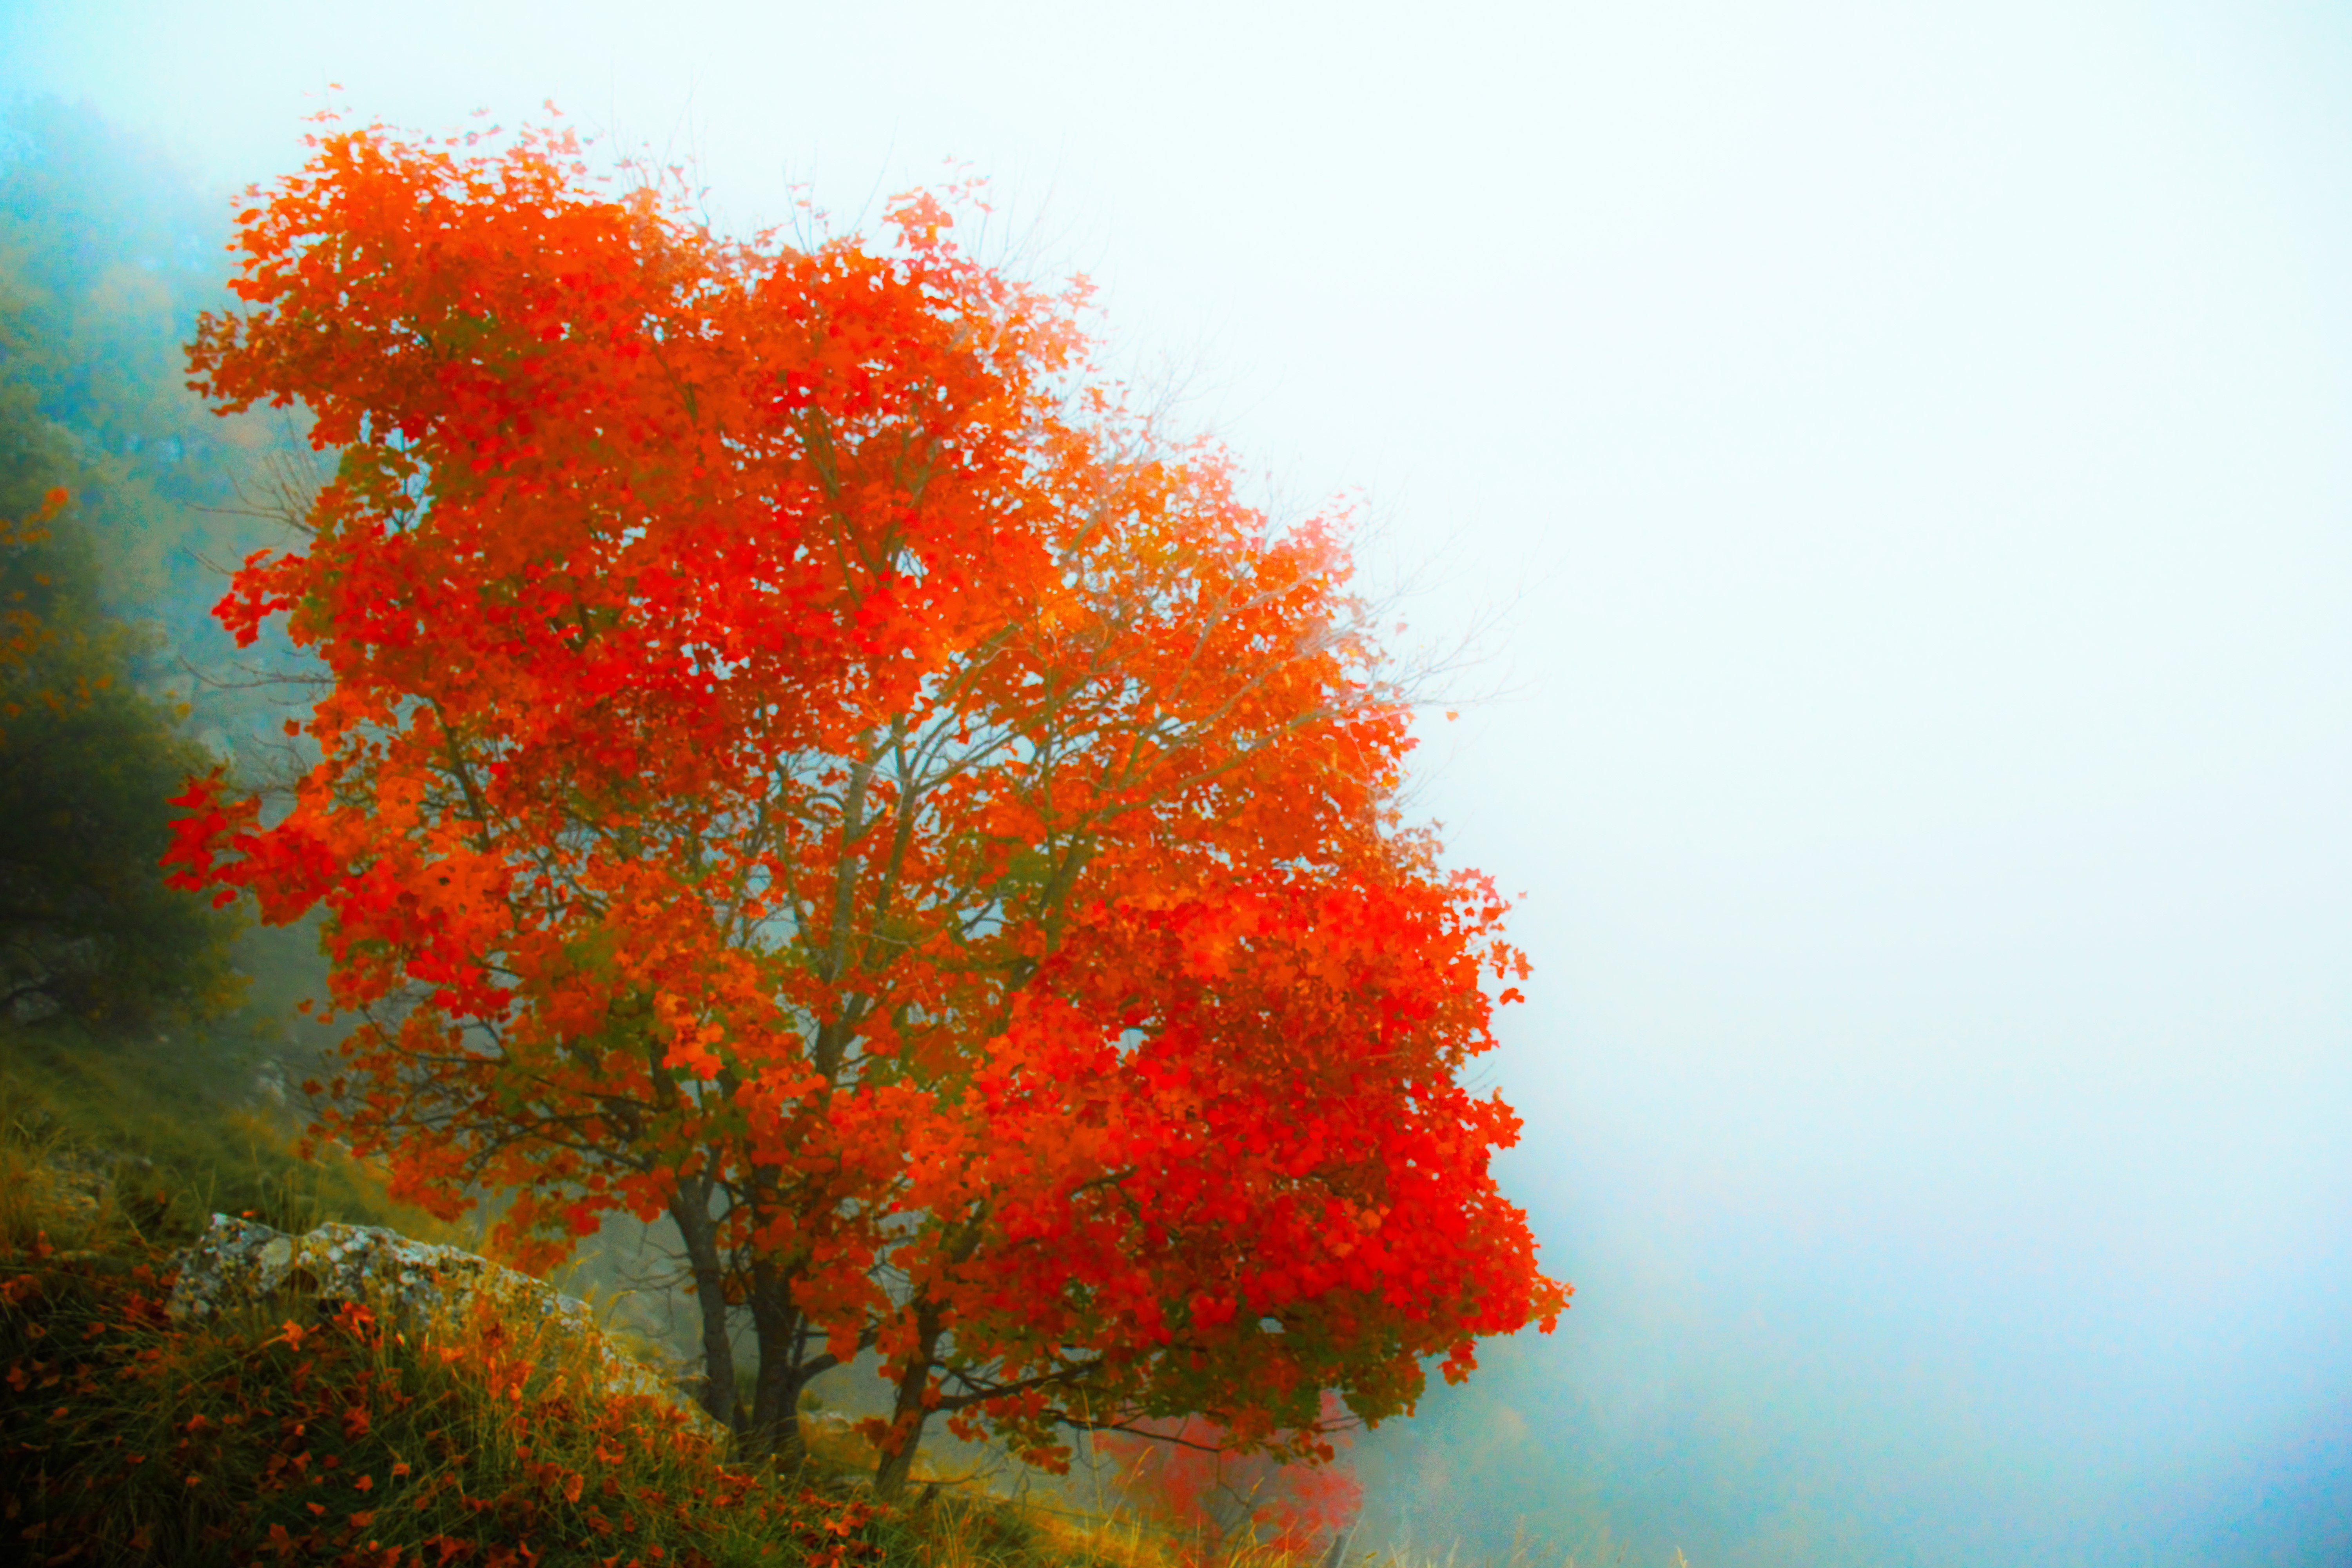 Red Tree by Dasfalmir on DeviantArt